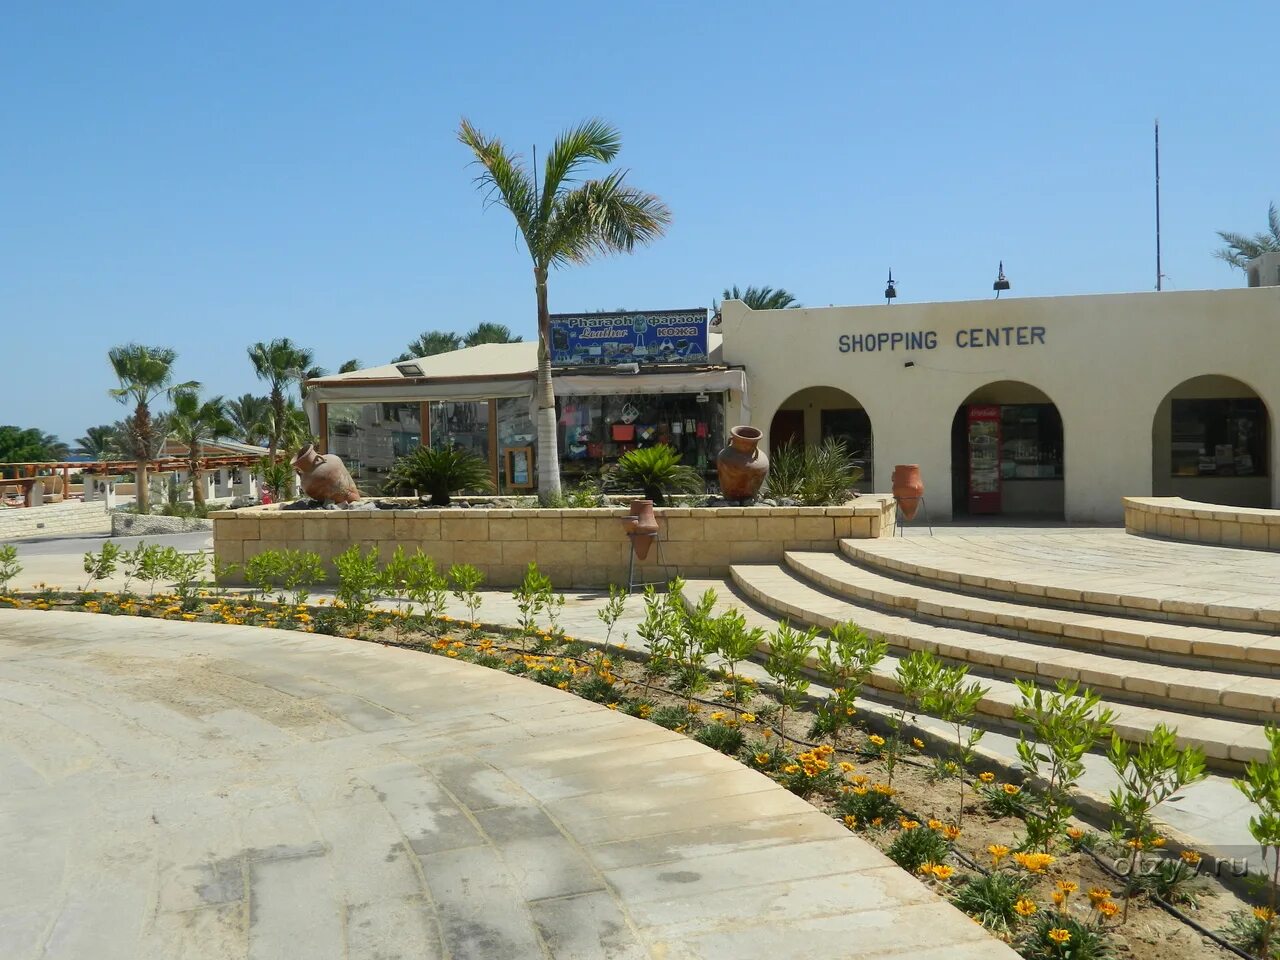 Coral beach rotana resort 4. Coral Beach Hotel Hurghada Египет Хургада. Отель Корал Бич ротана Резорт Египет Хургада. Coral Beach Rotana Resort 4 Египет Хургада. Ротана Хургада отель Корал Бич.